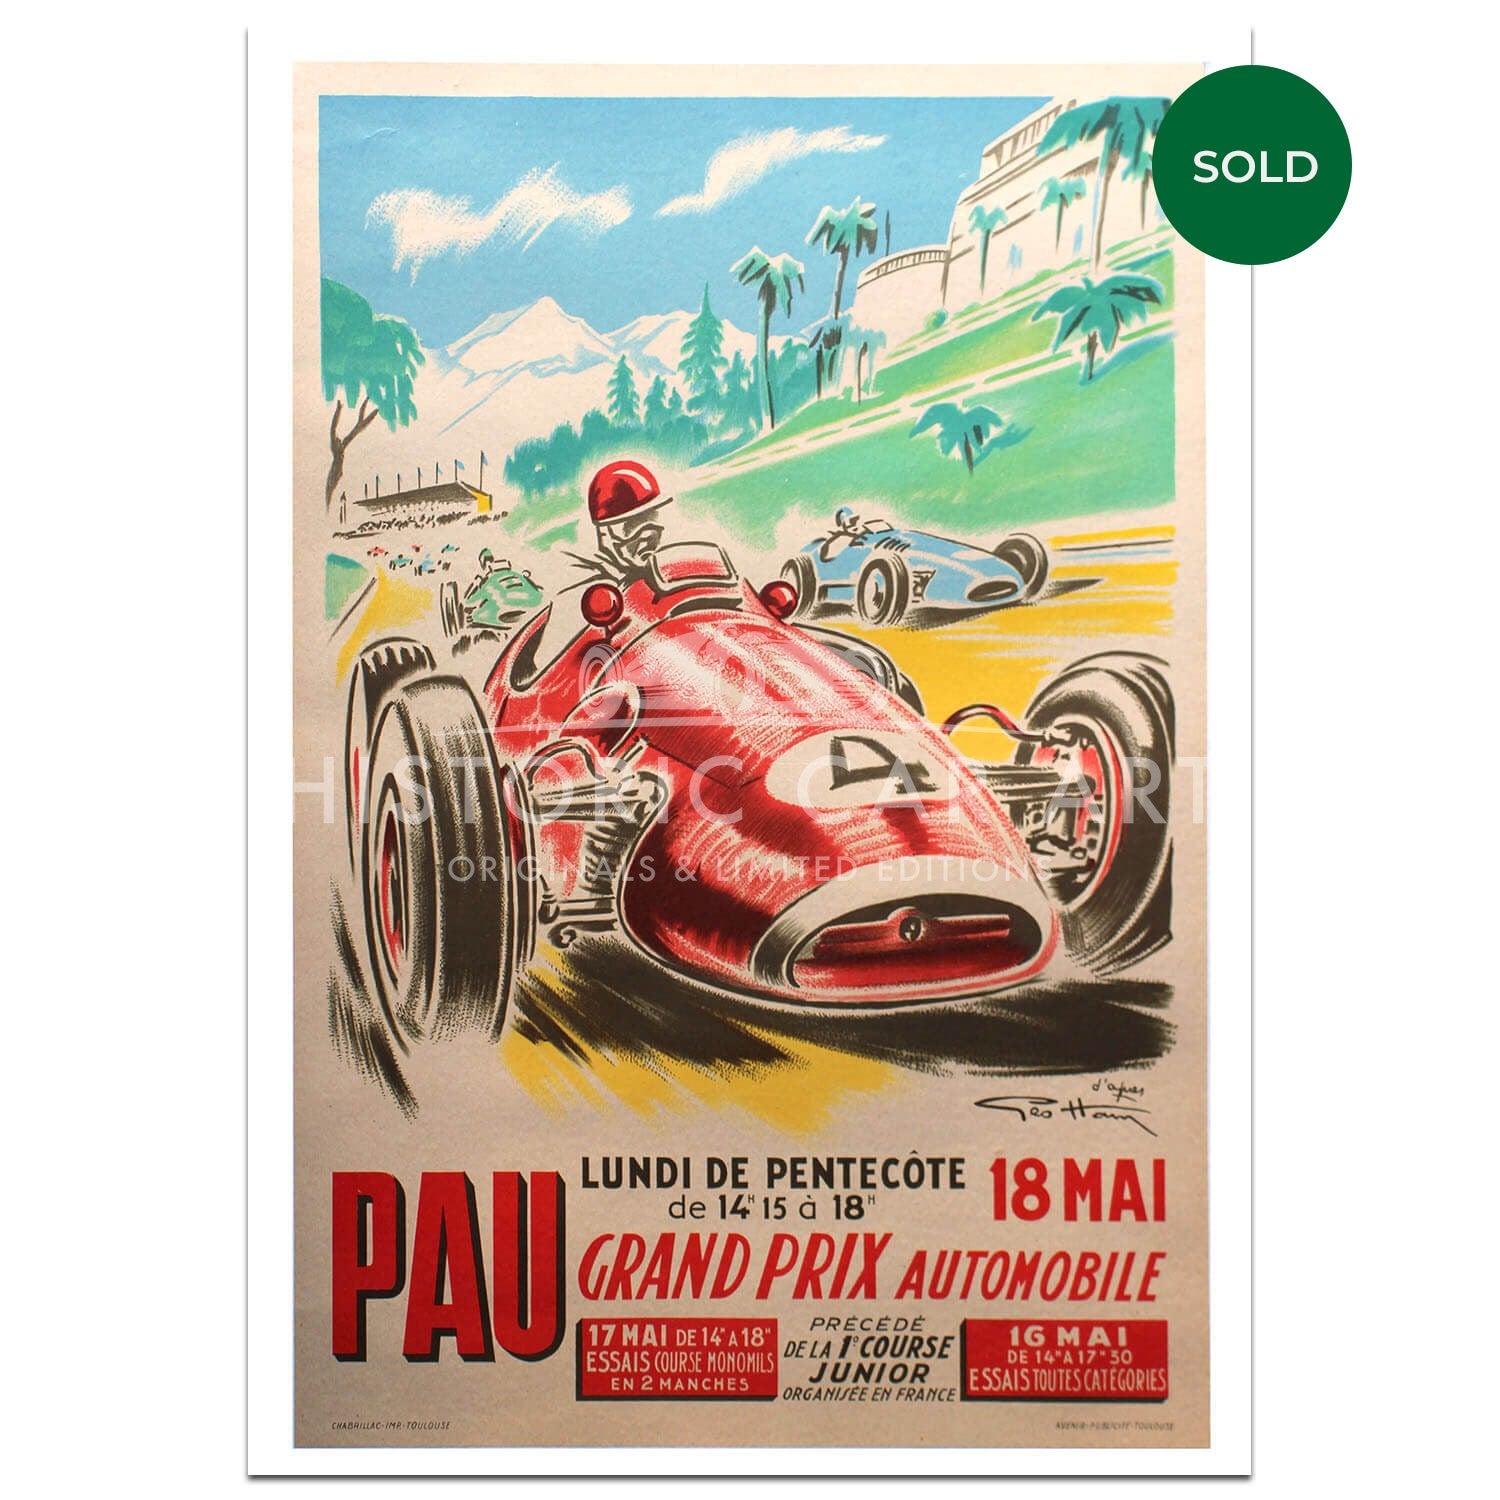 French | Grand Prix Automobile Pau 1953 Poster